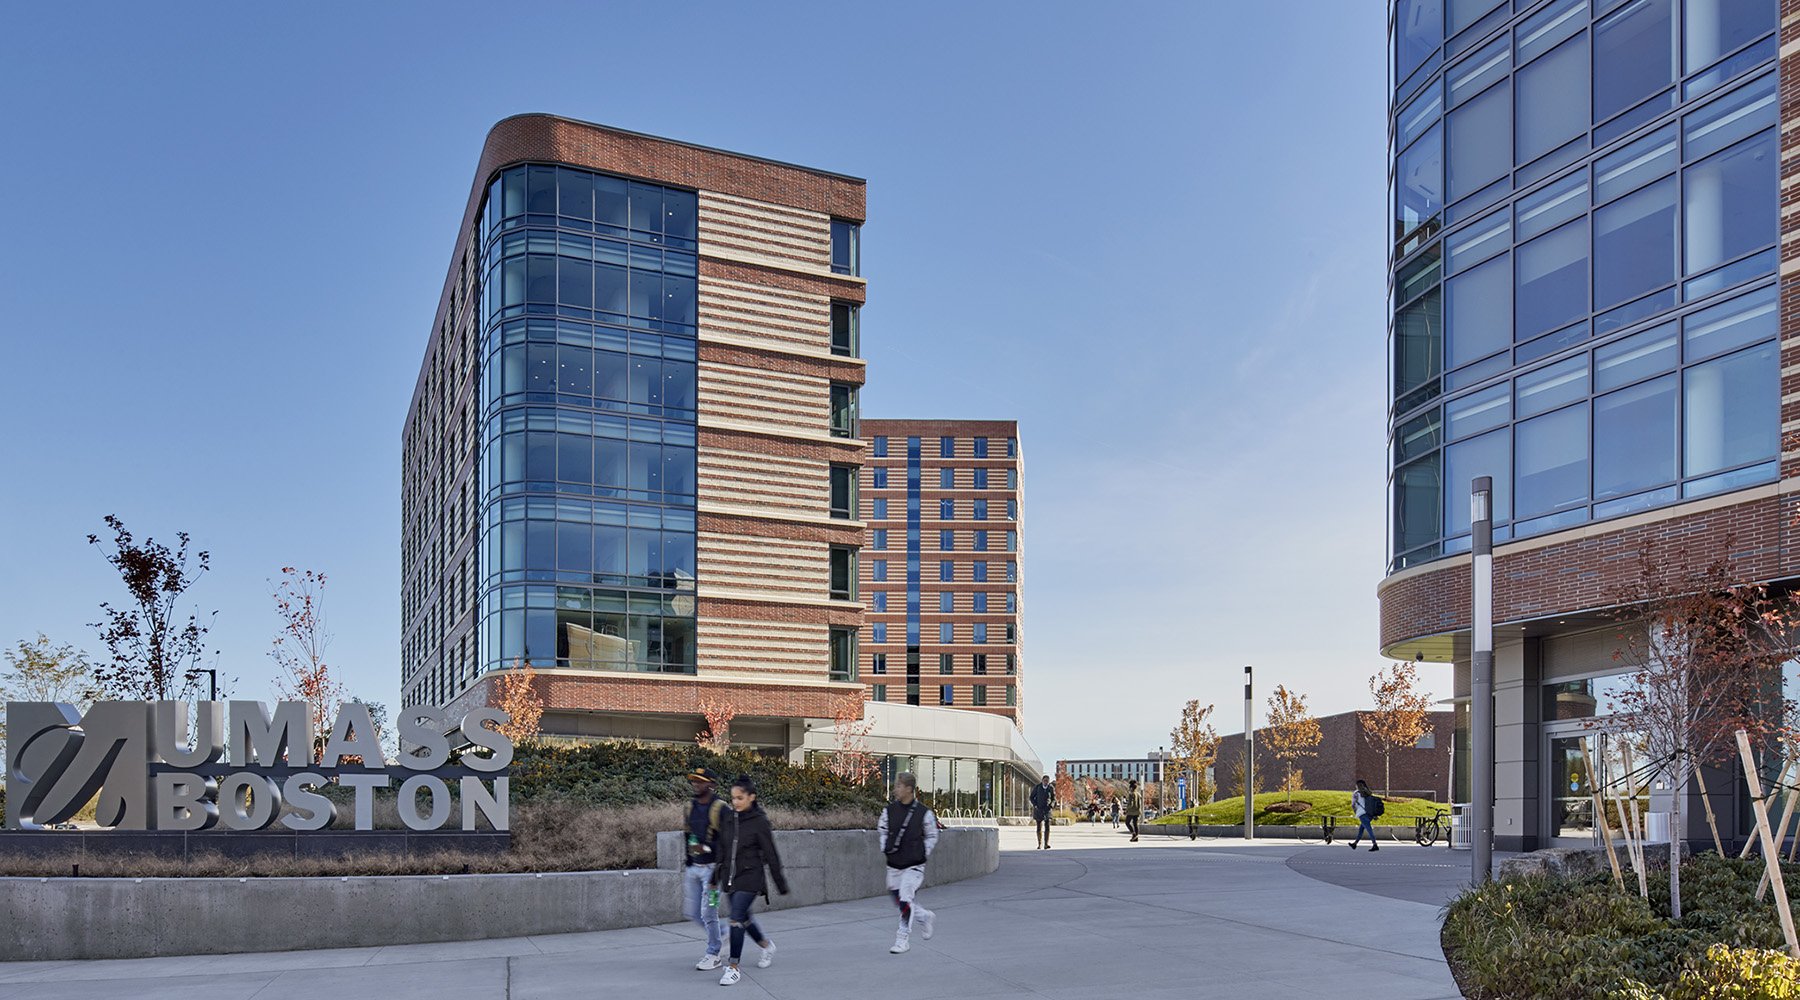 University of Massachusetts Boston / Student Residence Hall - Elkus Manfredi Architects